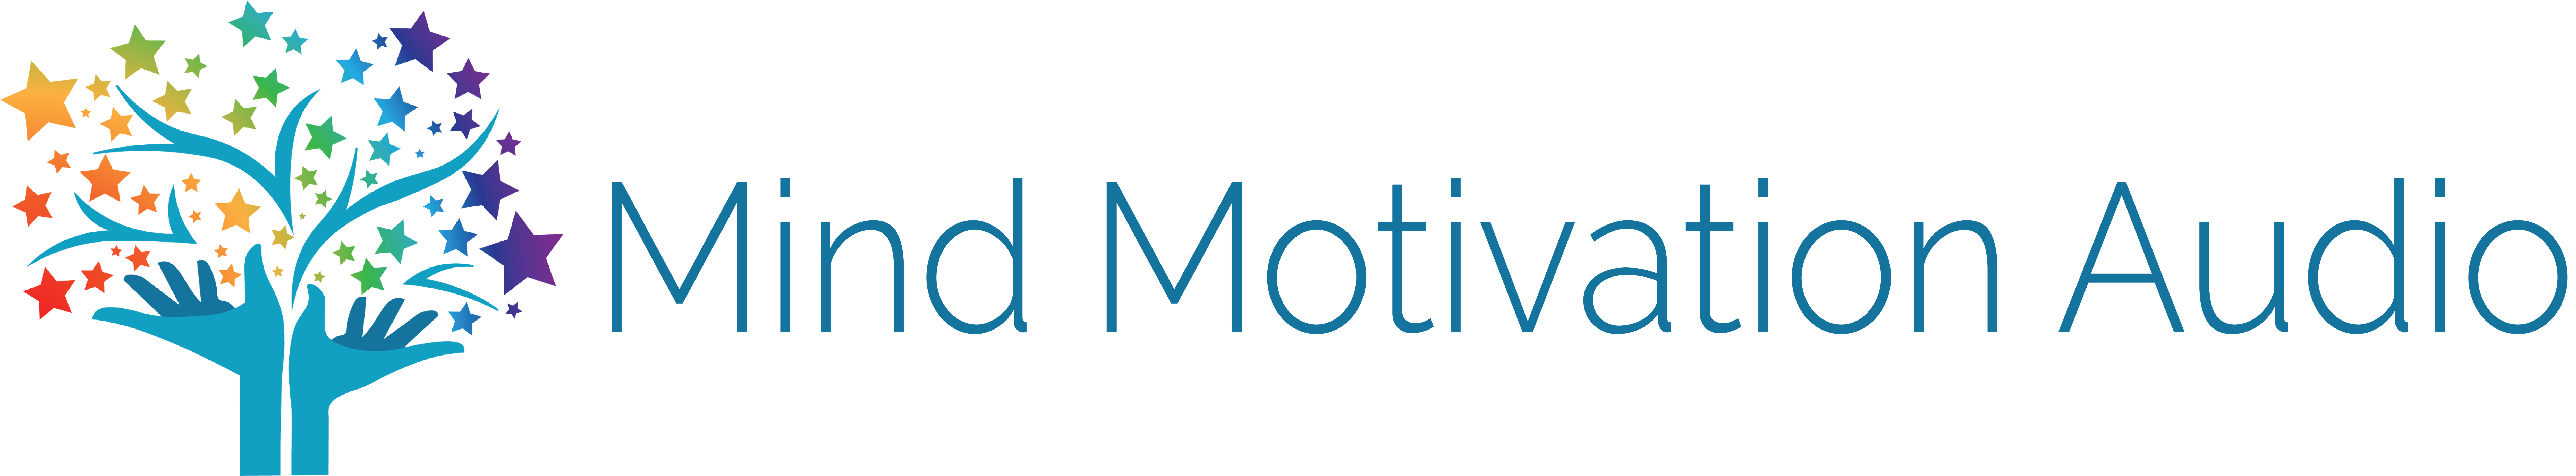 Mind Motivation audio logo